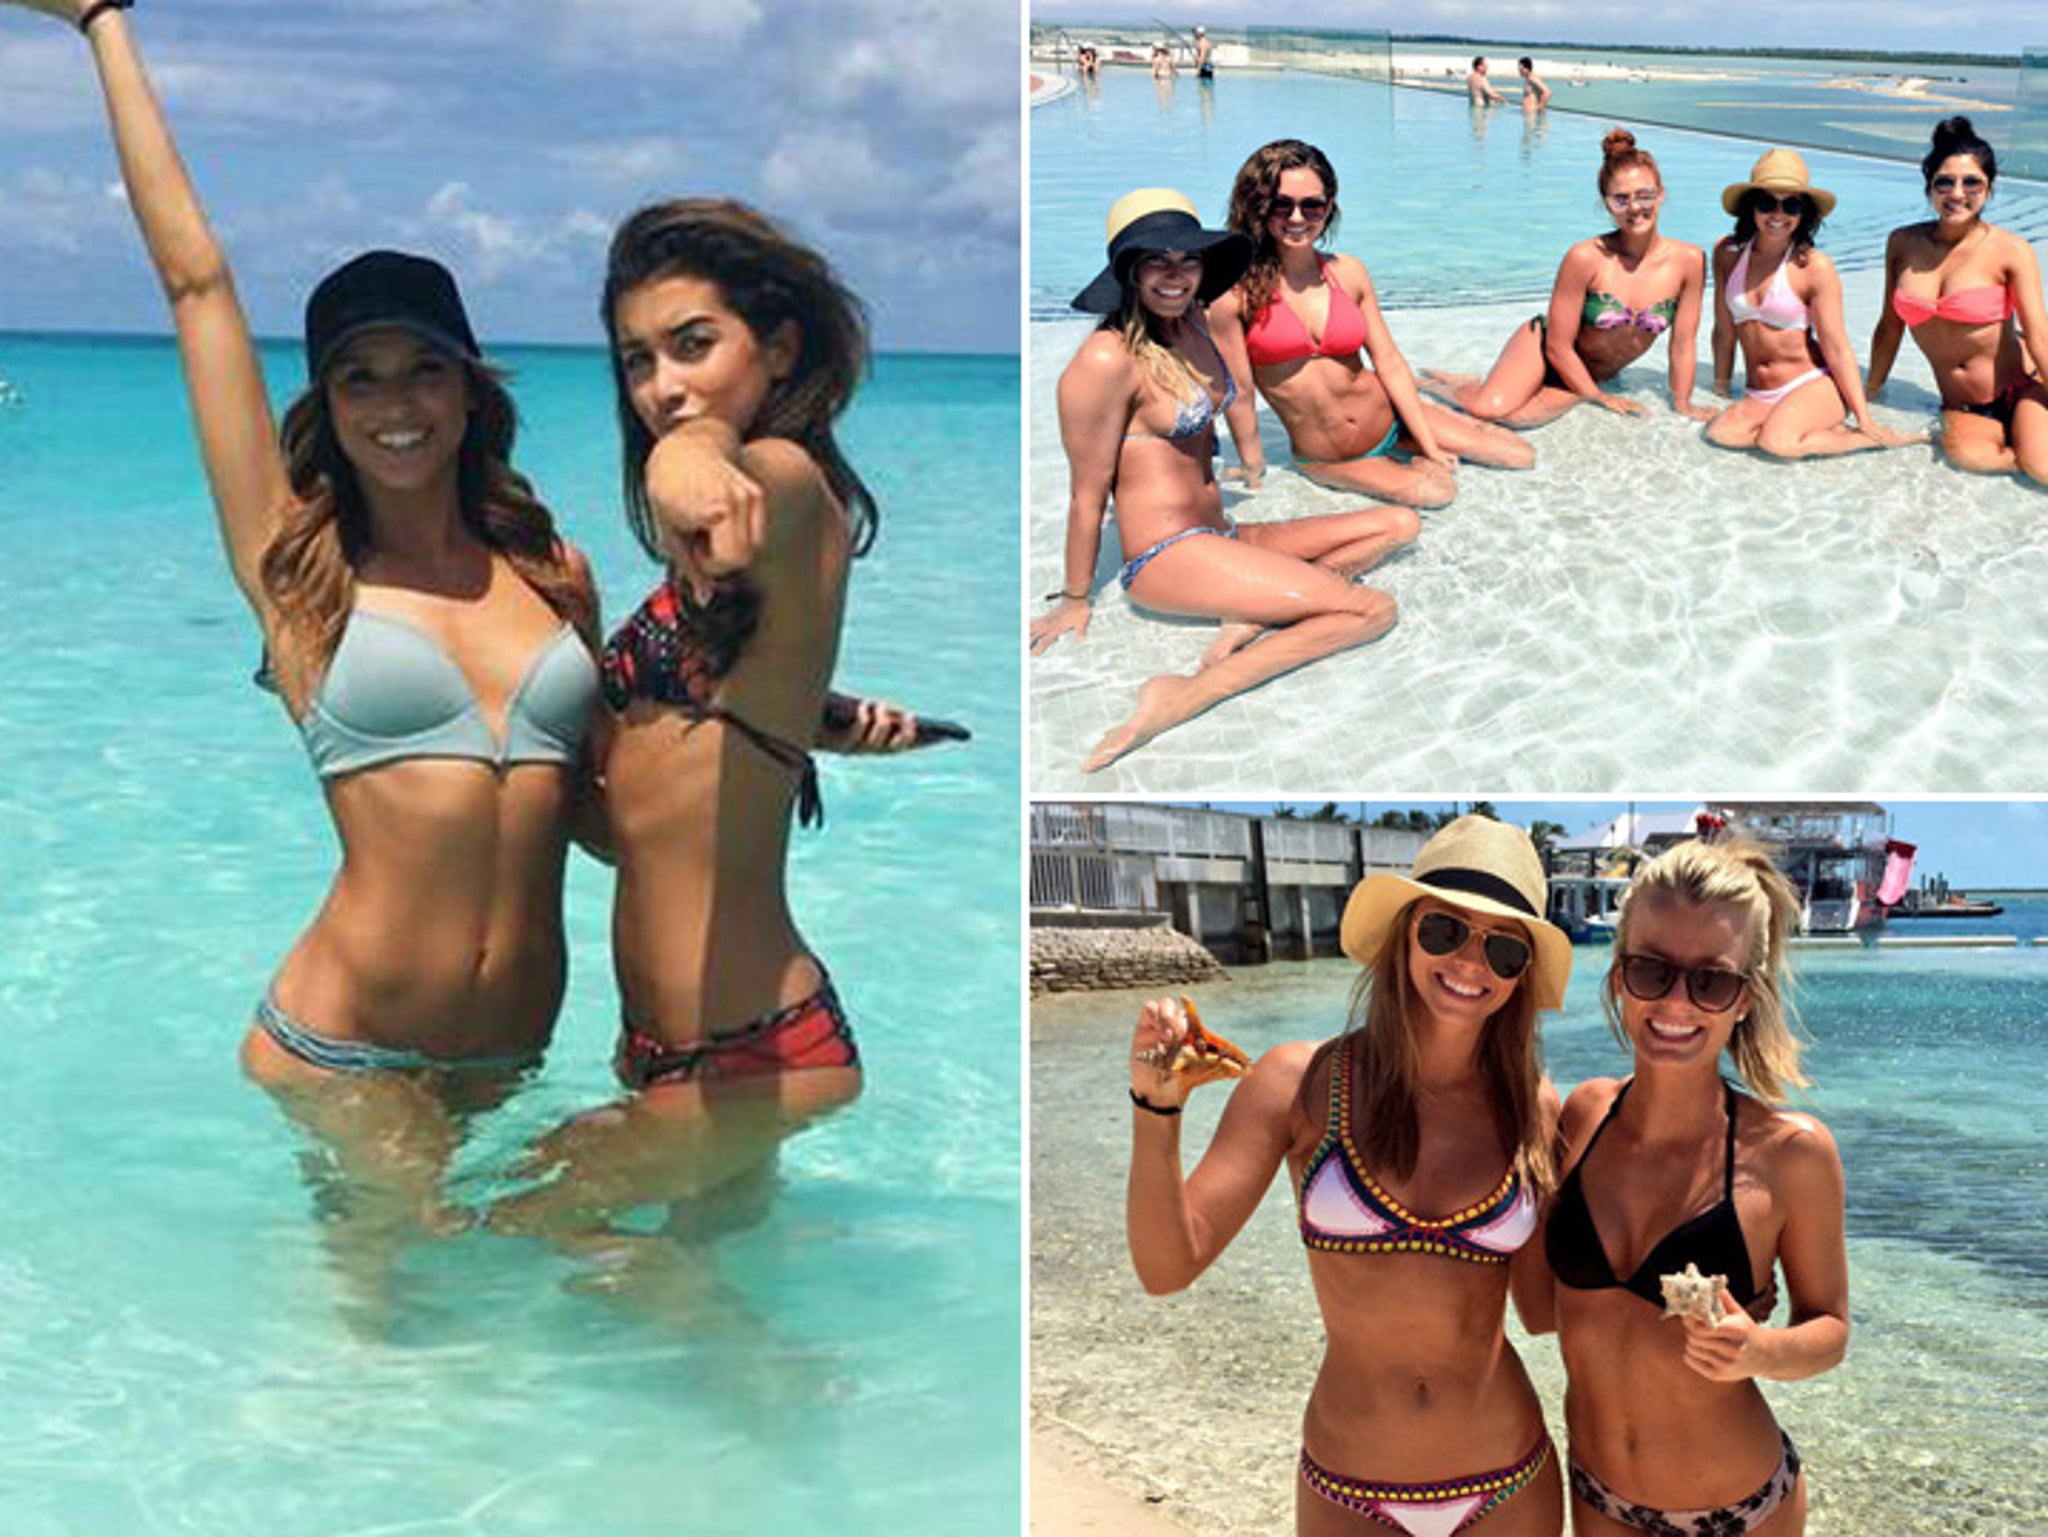 Dallas Cowboys Cheerleaders Bikini Season For Tropical Calendar Shoot  (Photo Gallery)